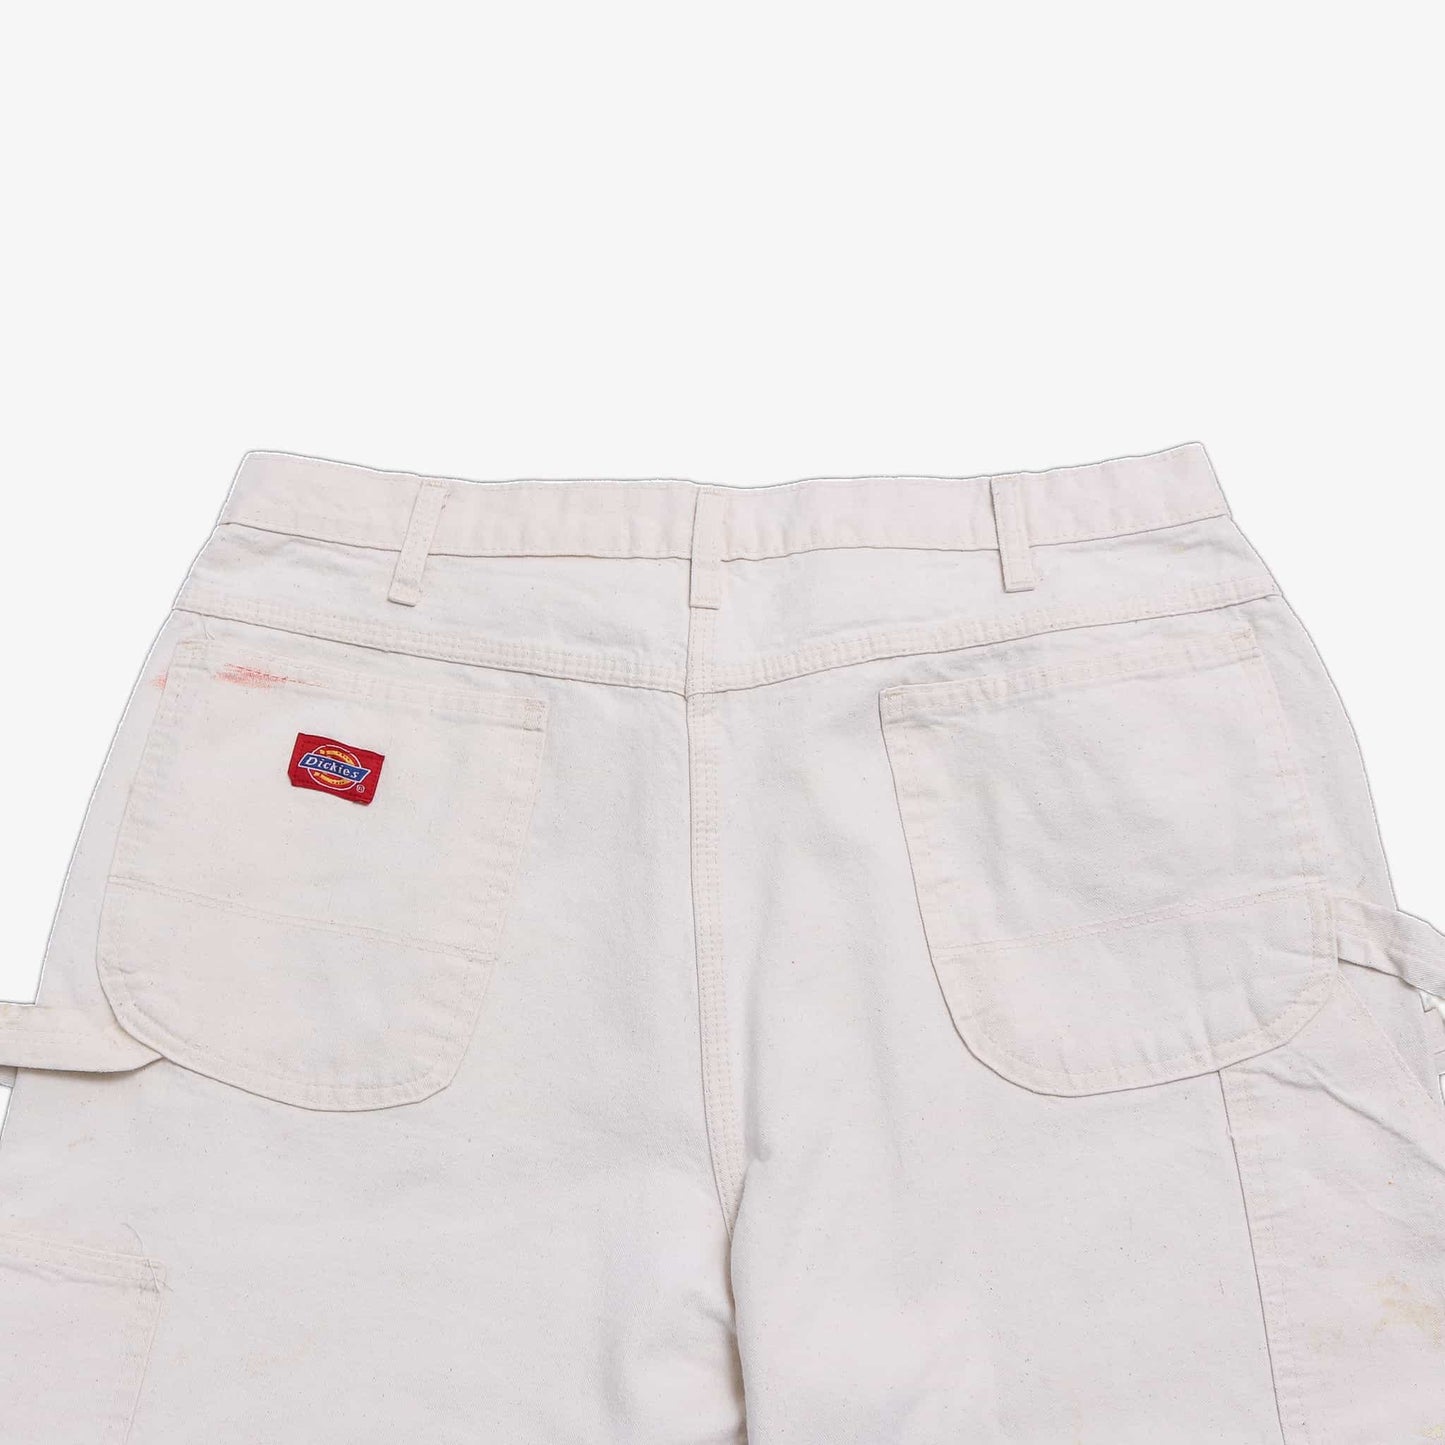 Vintage Carpenter Pants - White - 34/28 - American Madness